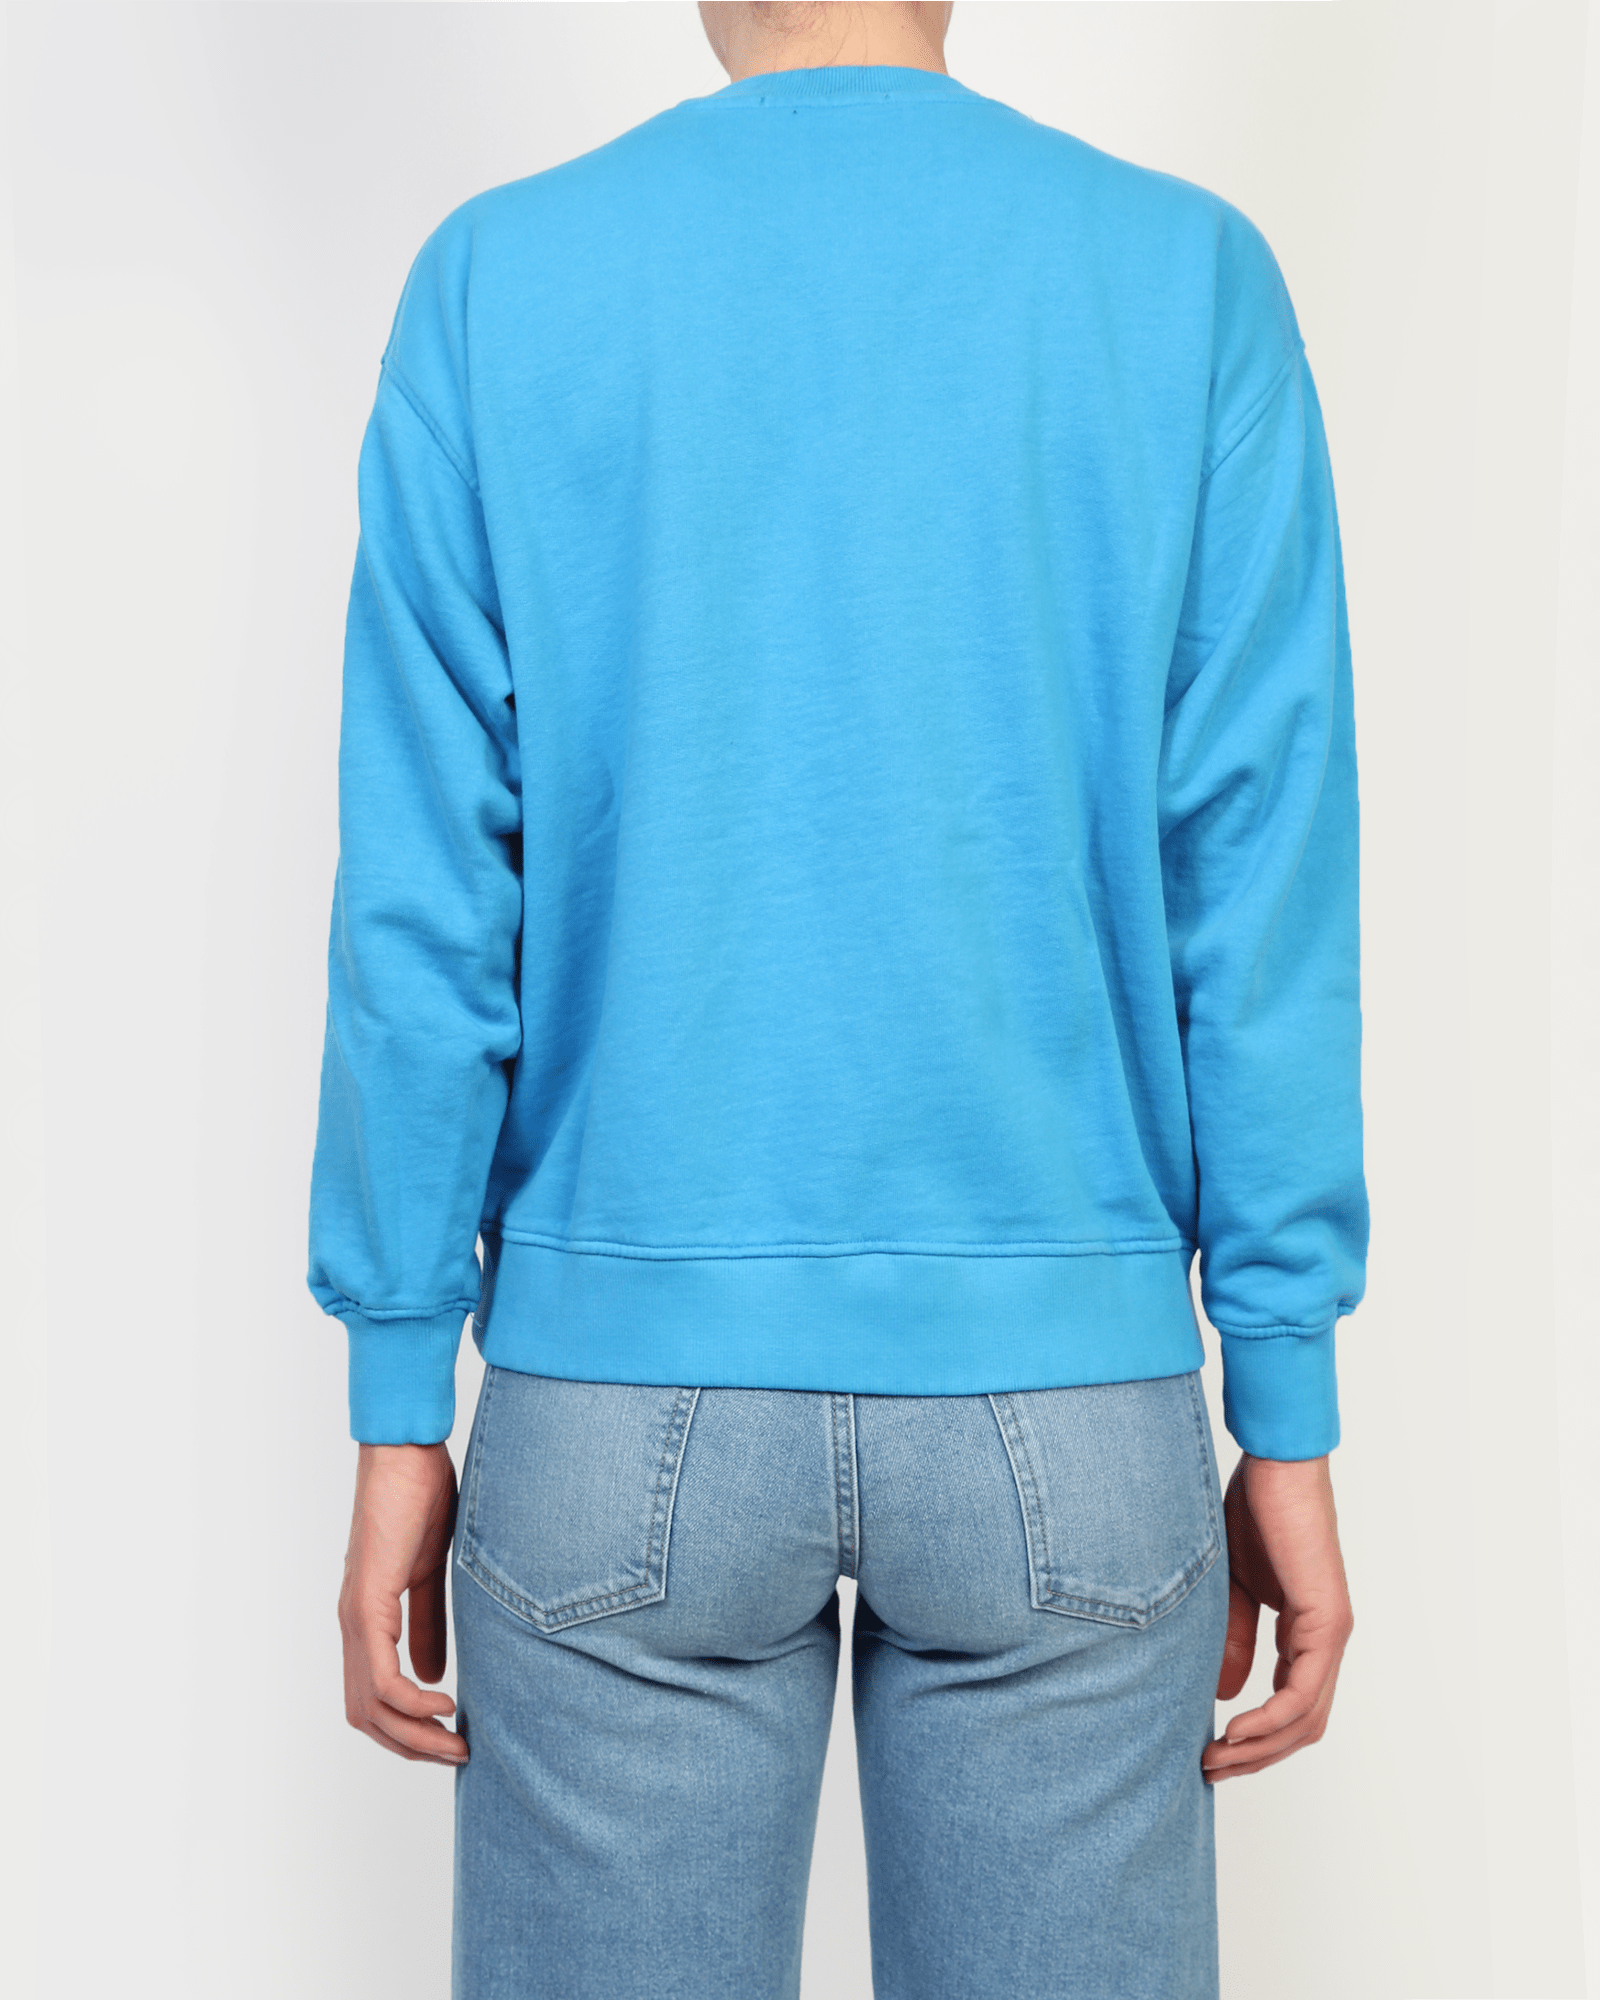 Sexsi Sweatshirt - Blue